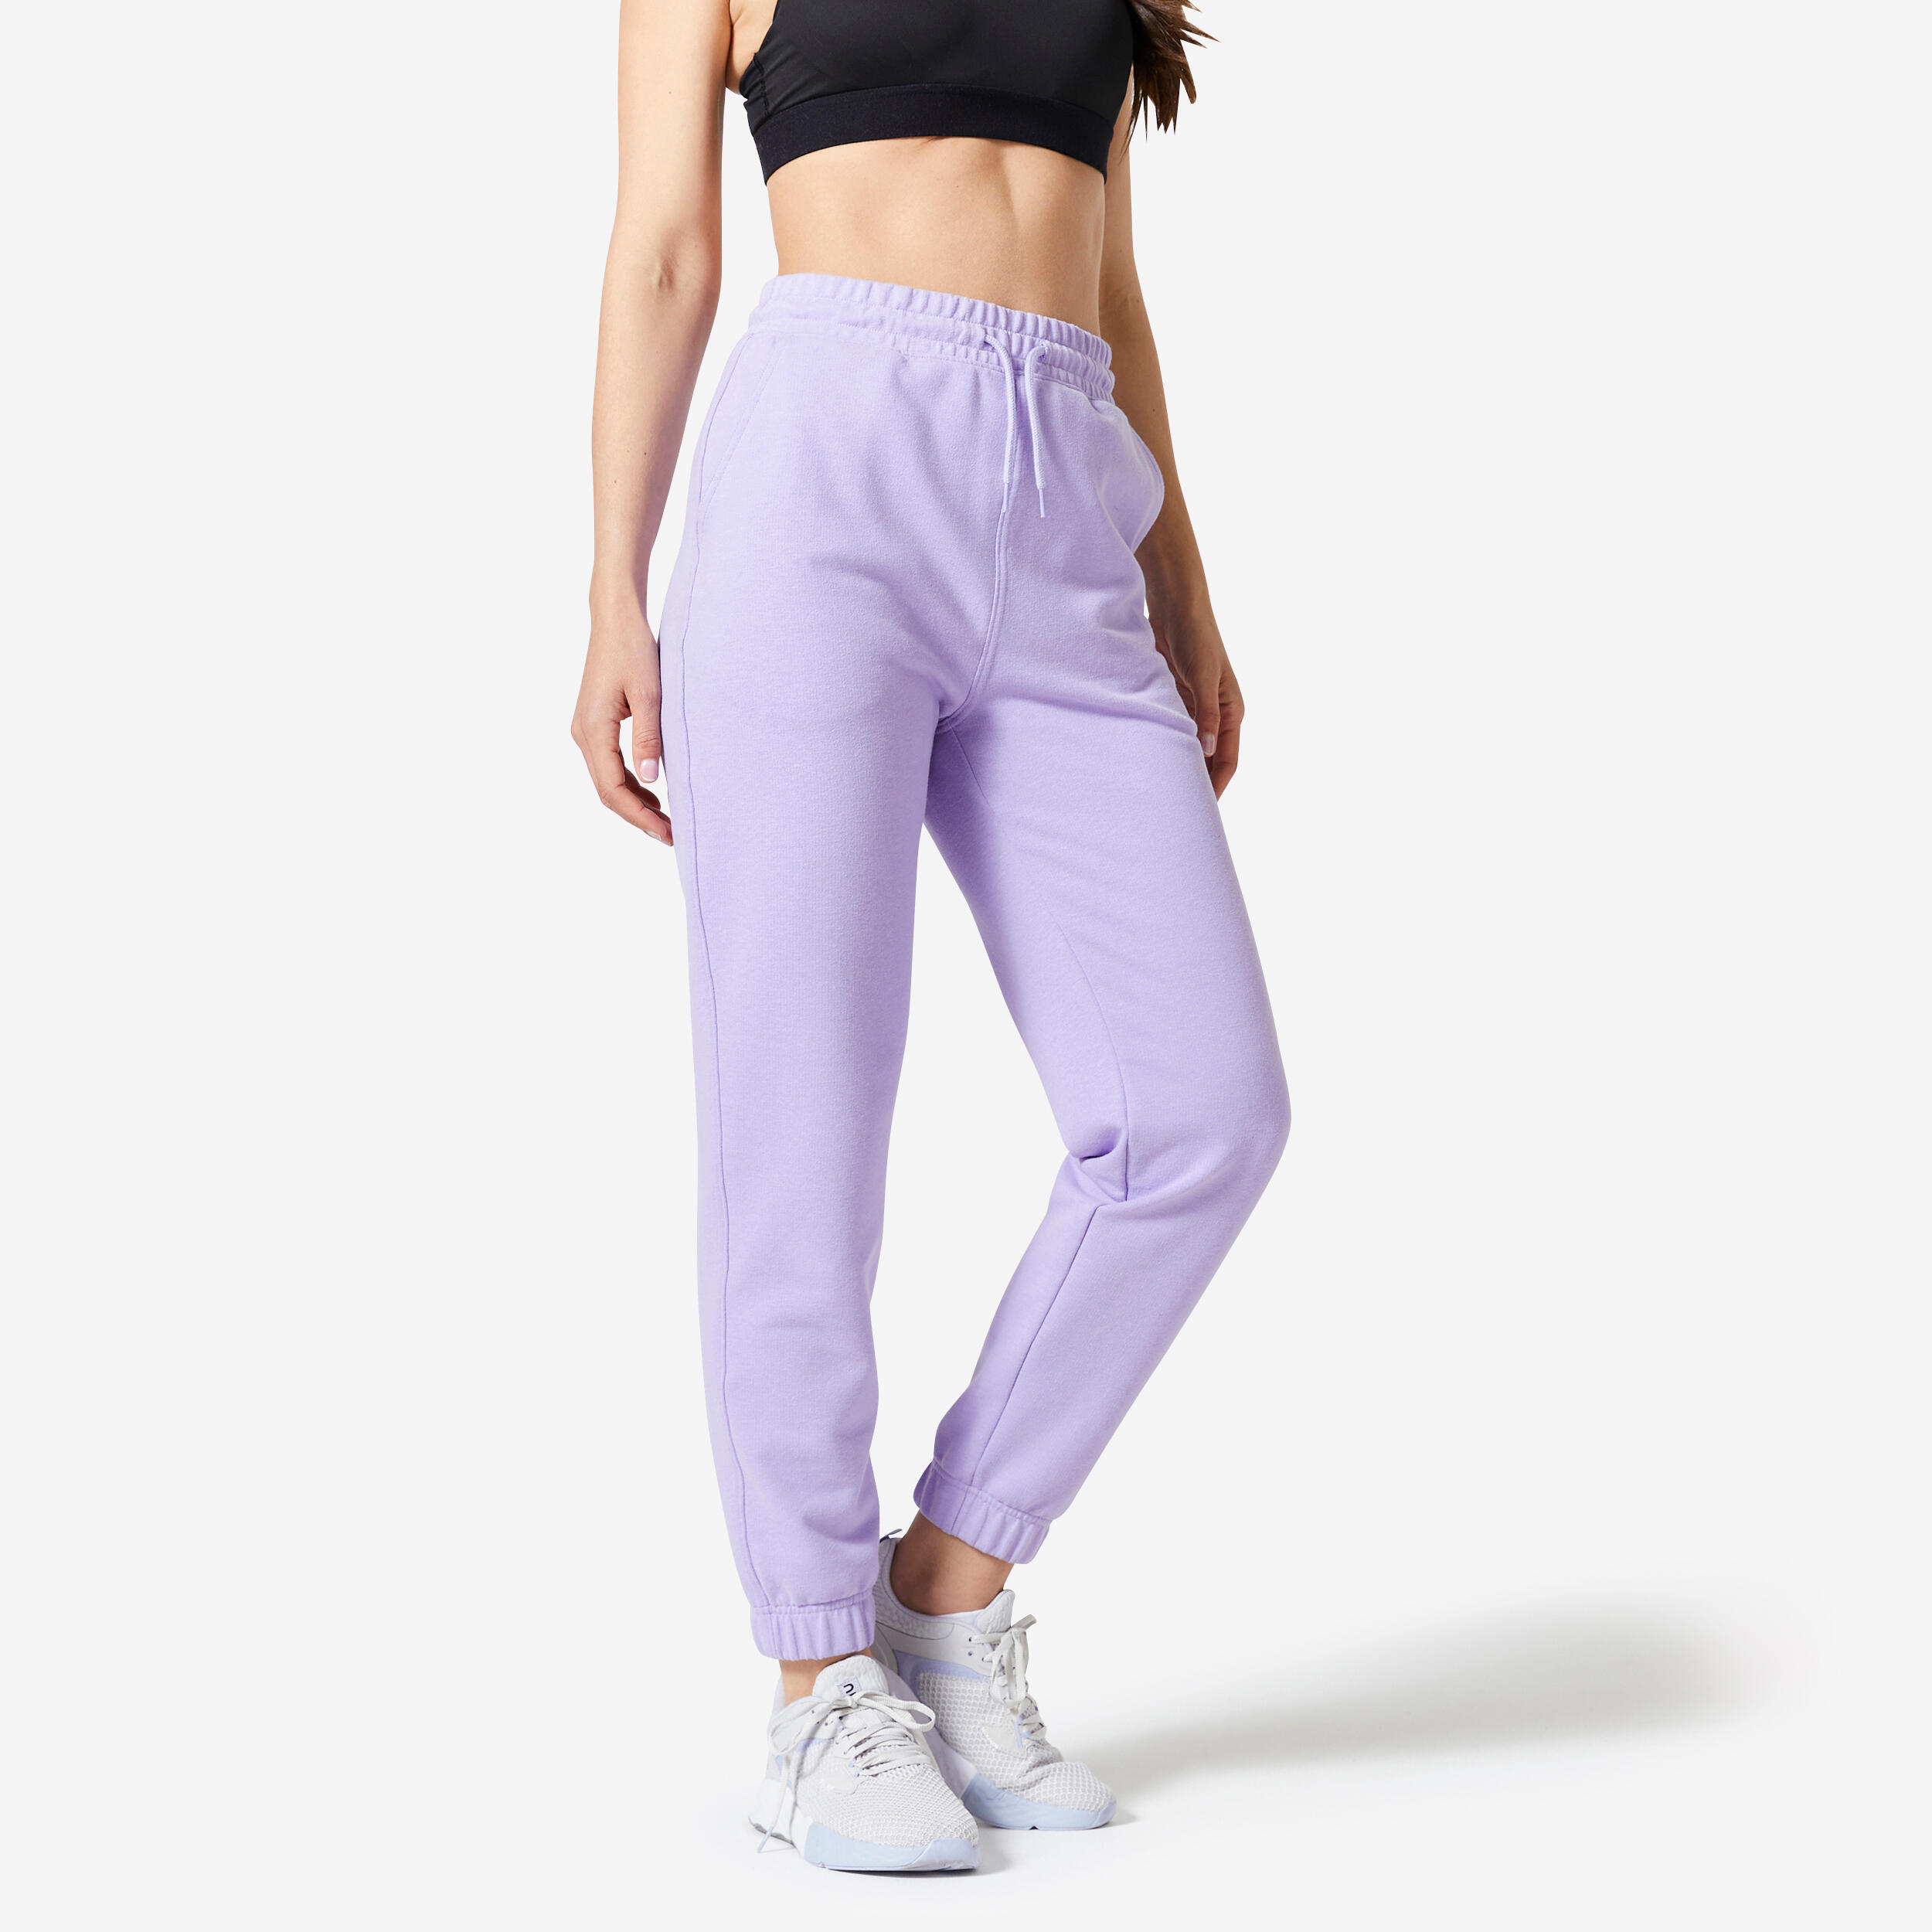 Women's Fitness Pants - 500 Essentials Purple - Neon lavender - Domyos -  Decathlon